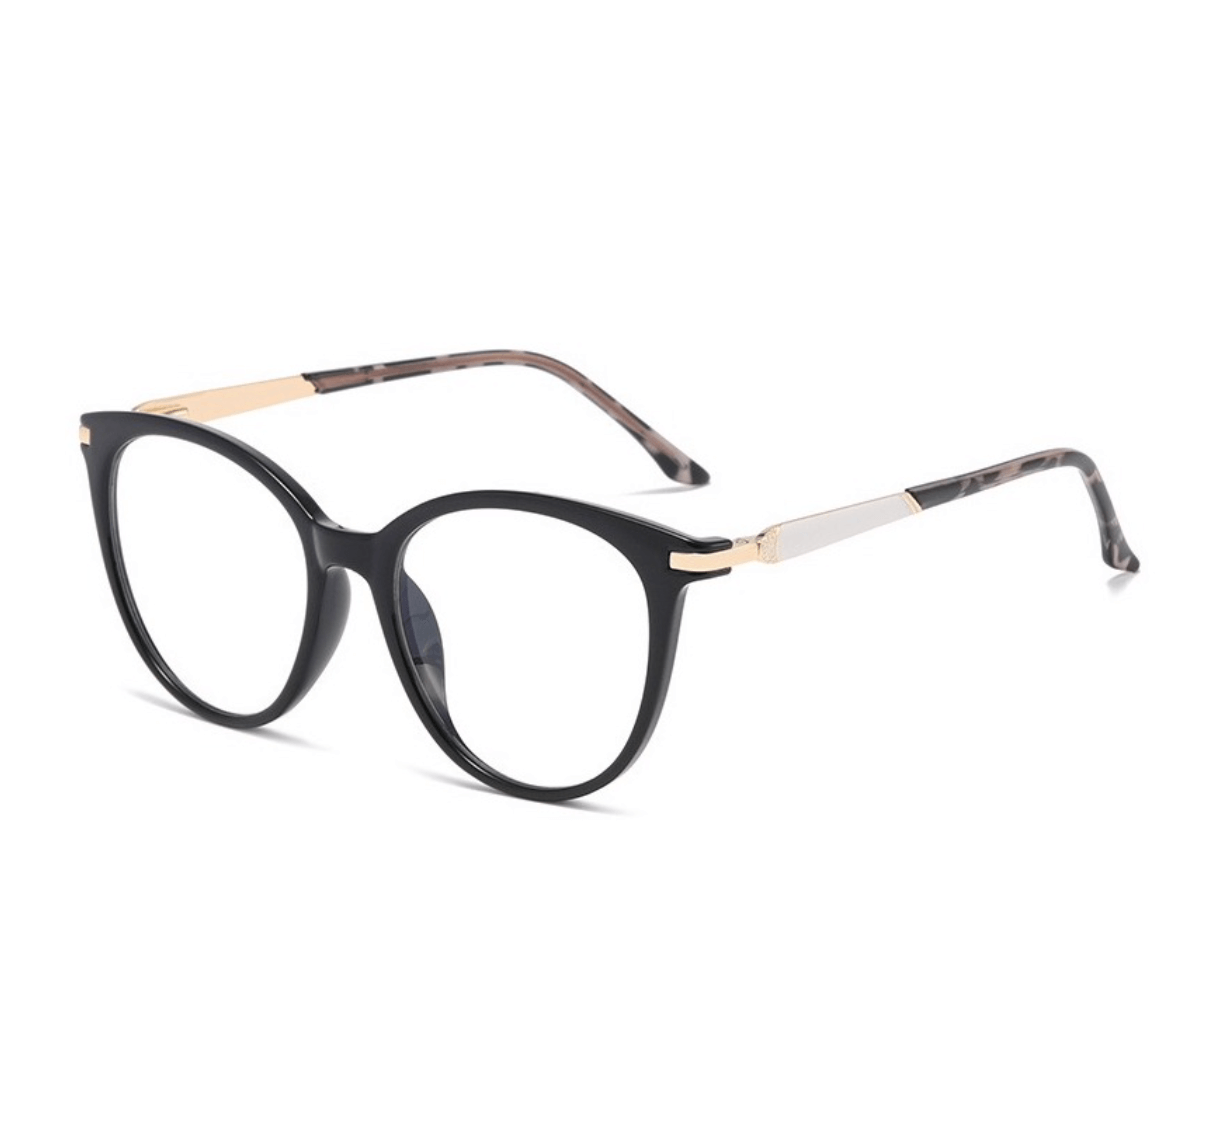 glasses frames for women TR90, eyeglass frames manufacturers